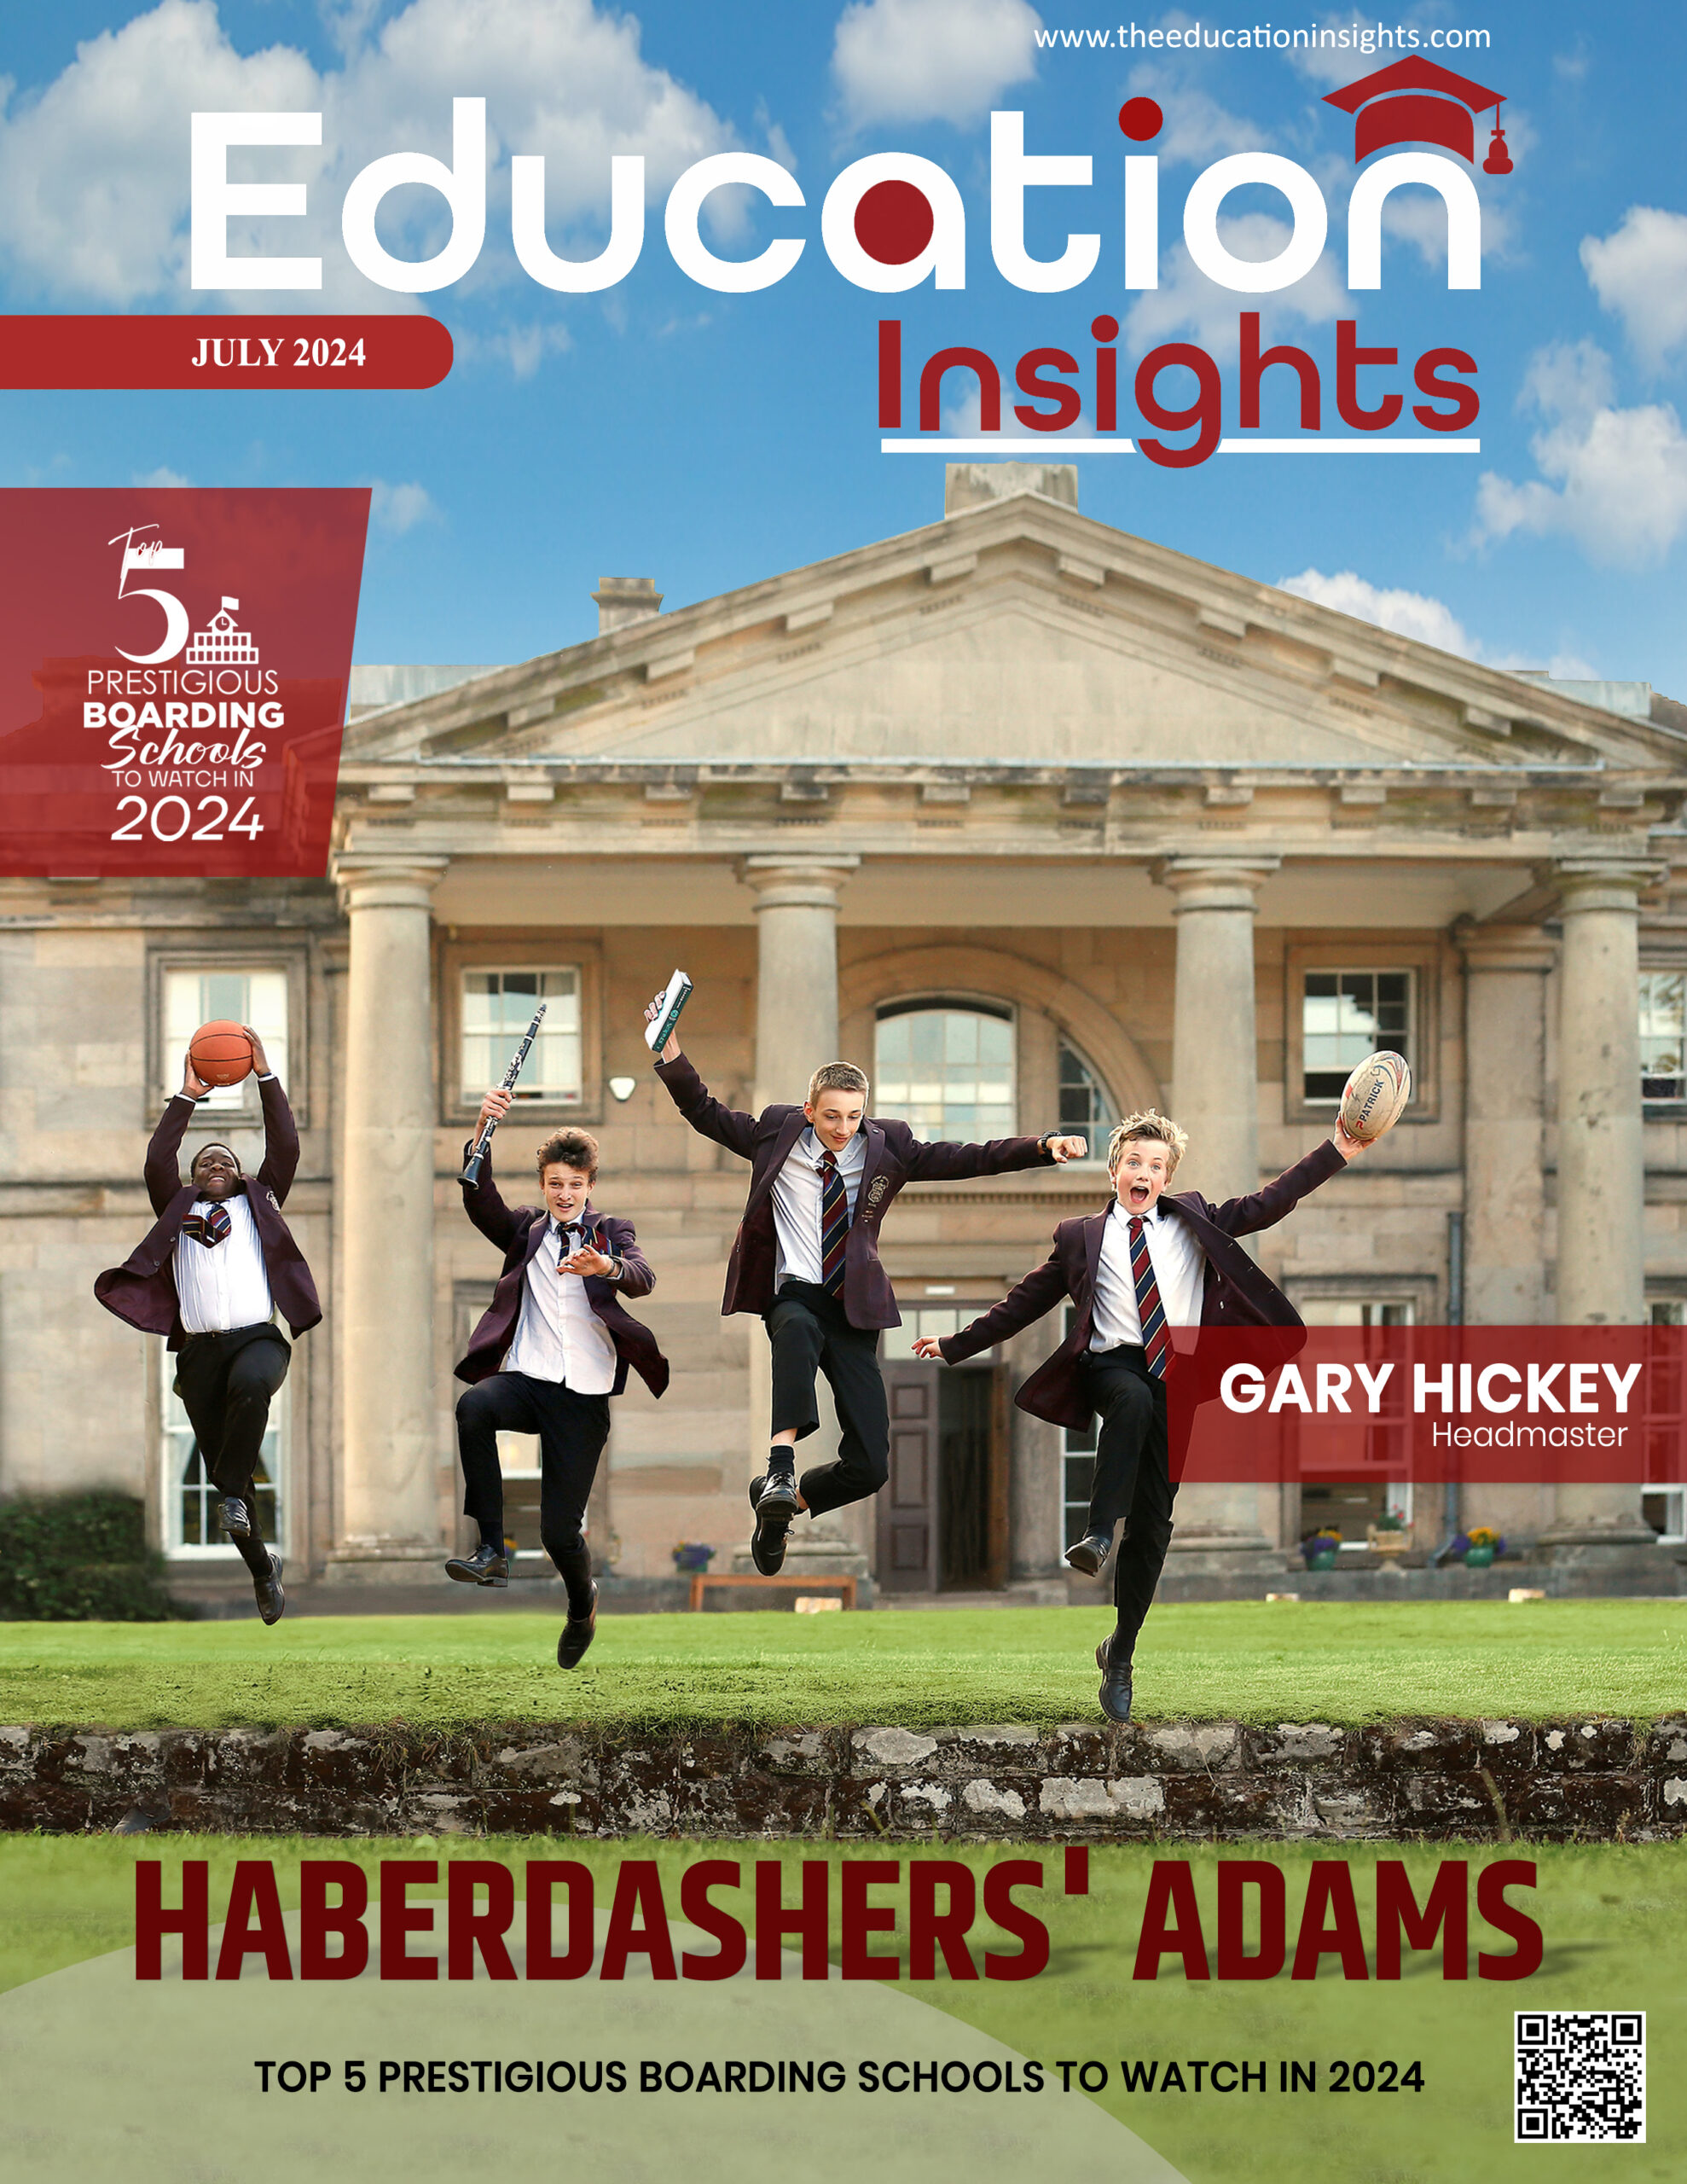 Gary Hickey | Headmaster | Haberdashers’ Adams | The Education insights